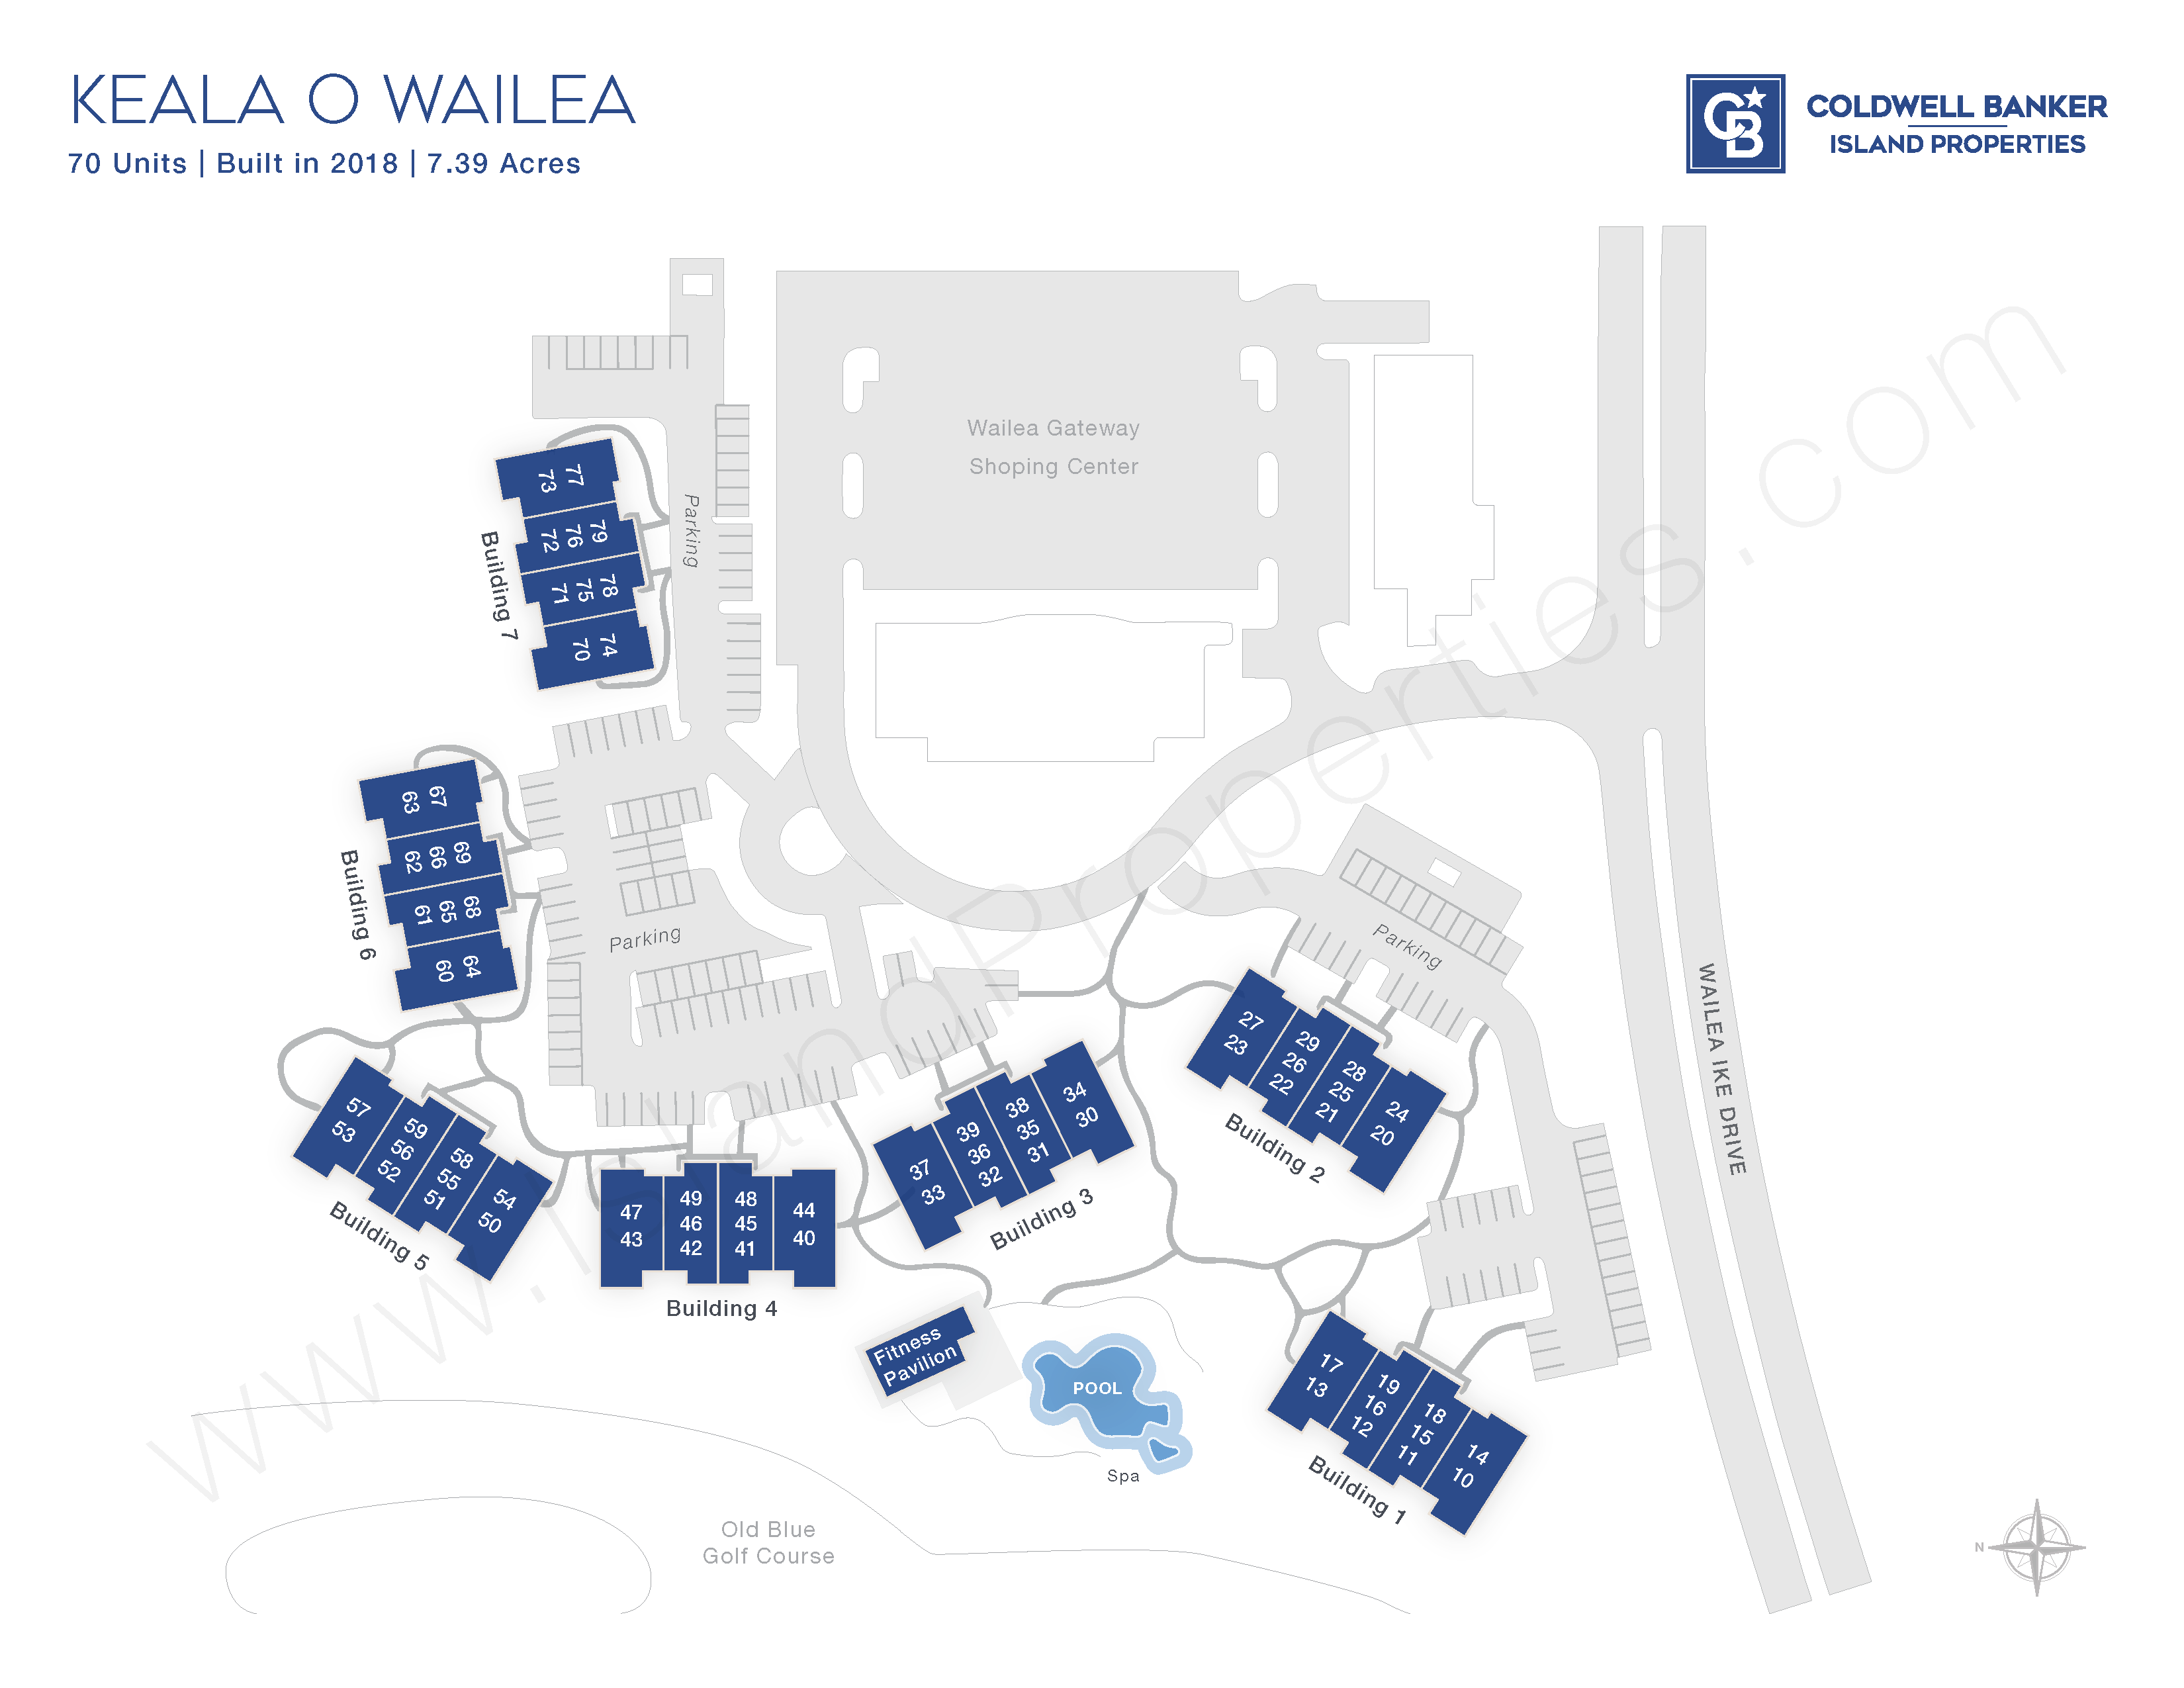 Keala o Wailea Coldwell Banker Island Properties